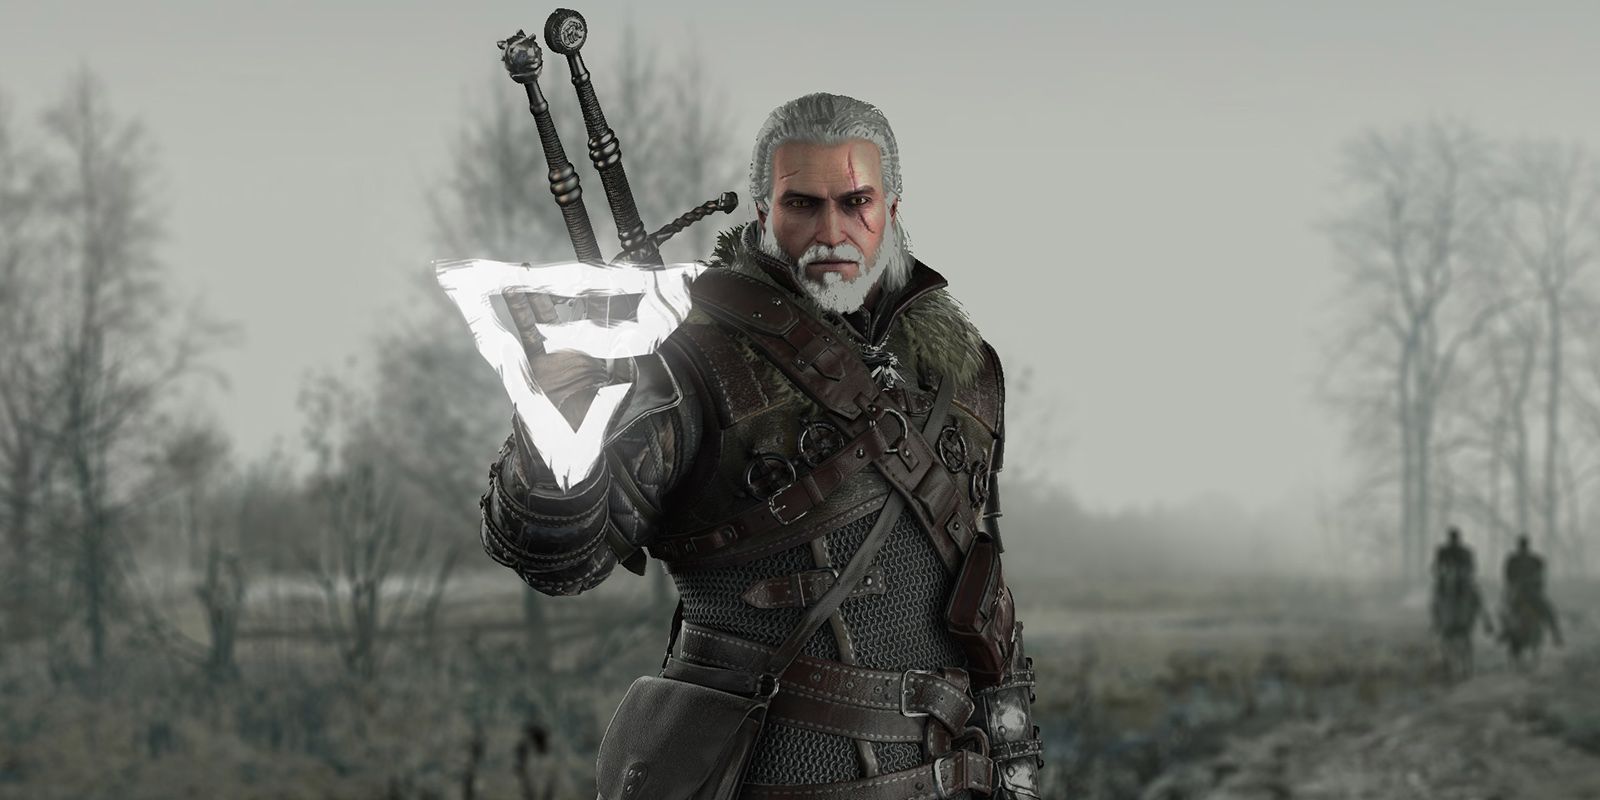 Witcher 3 - Geralt in Grandmaster Legendary Ursine Armor